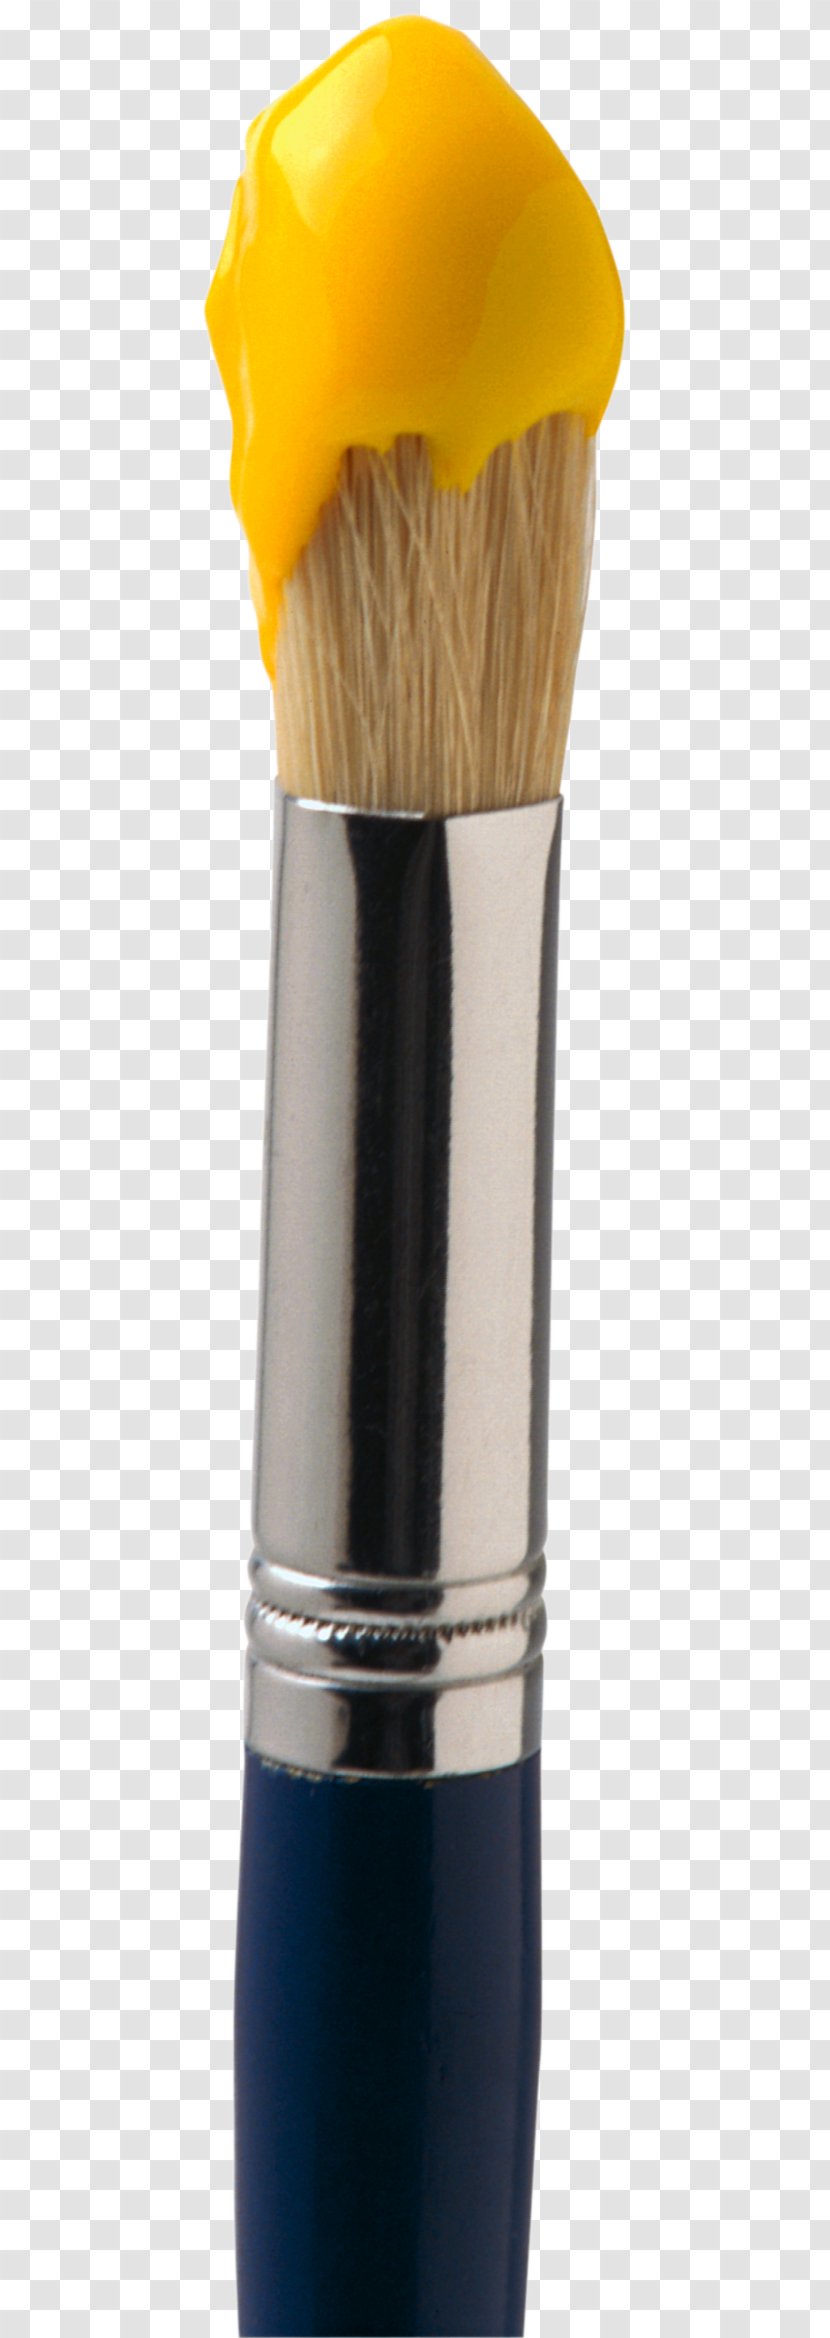 Paintbrush Palette Clip Art - Brush - Painbrush Transparent PNG